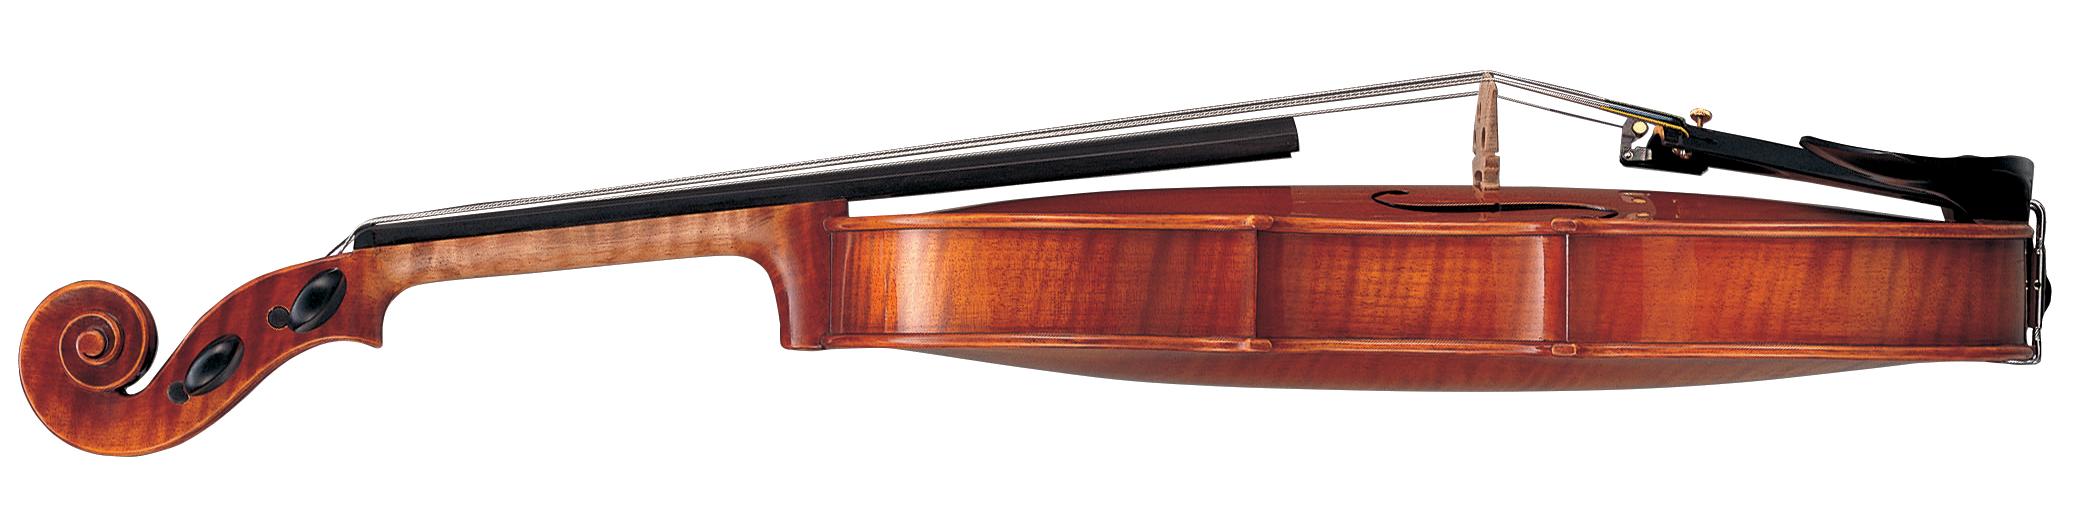 MrSilverTrumpet - Side View of a Violin